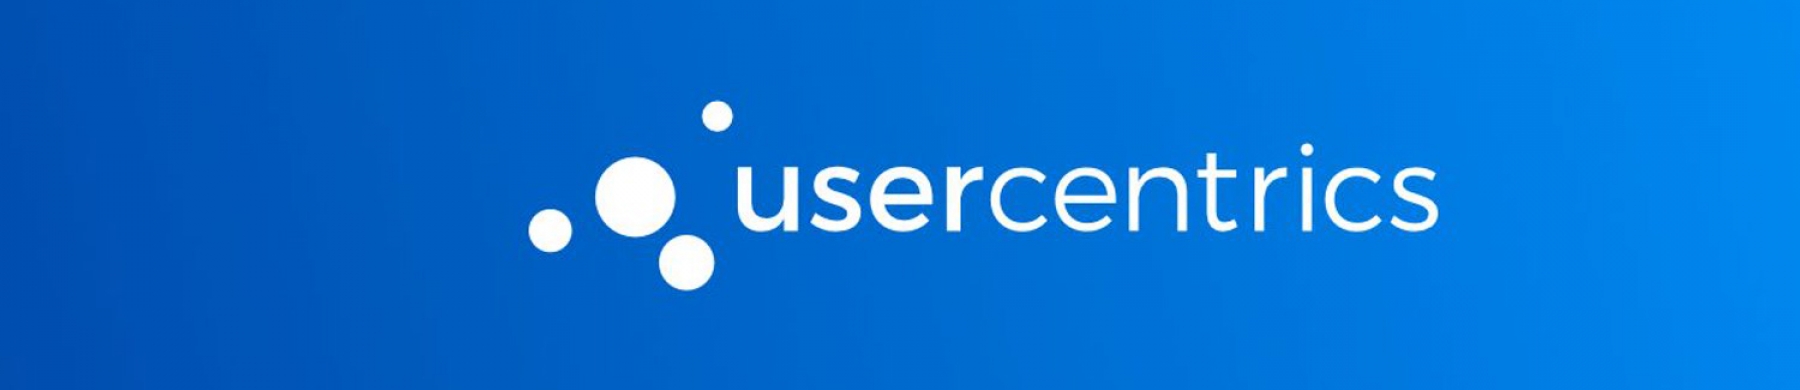 Bannière Usercentrics